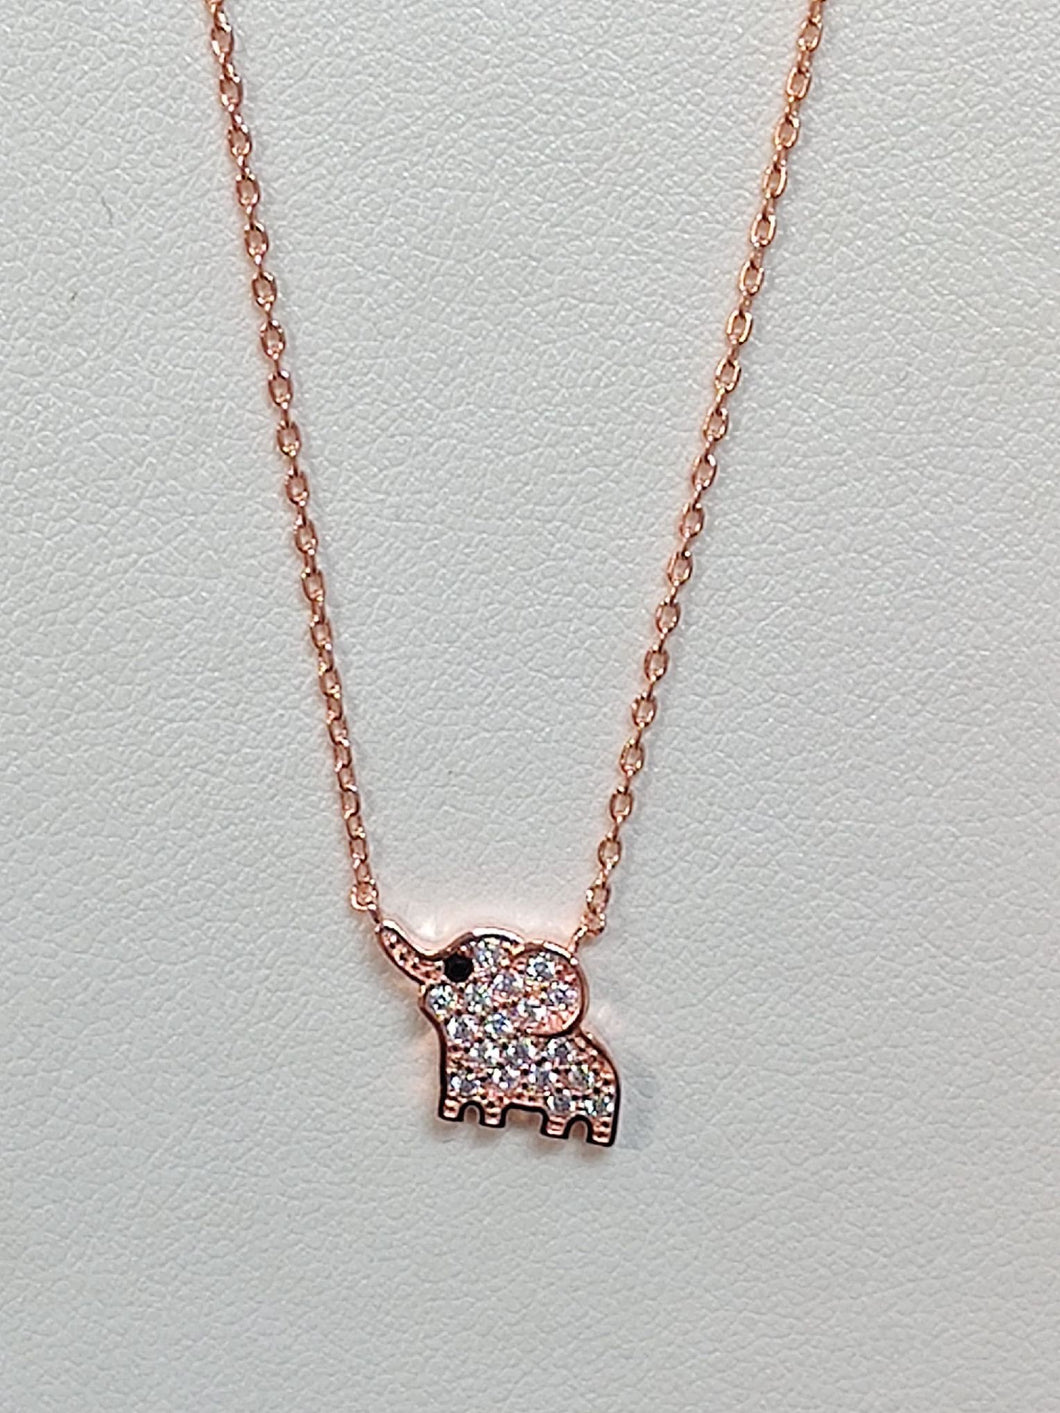 Rose Gold Crystal Elephant Necklace